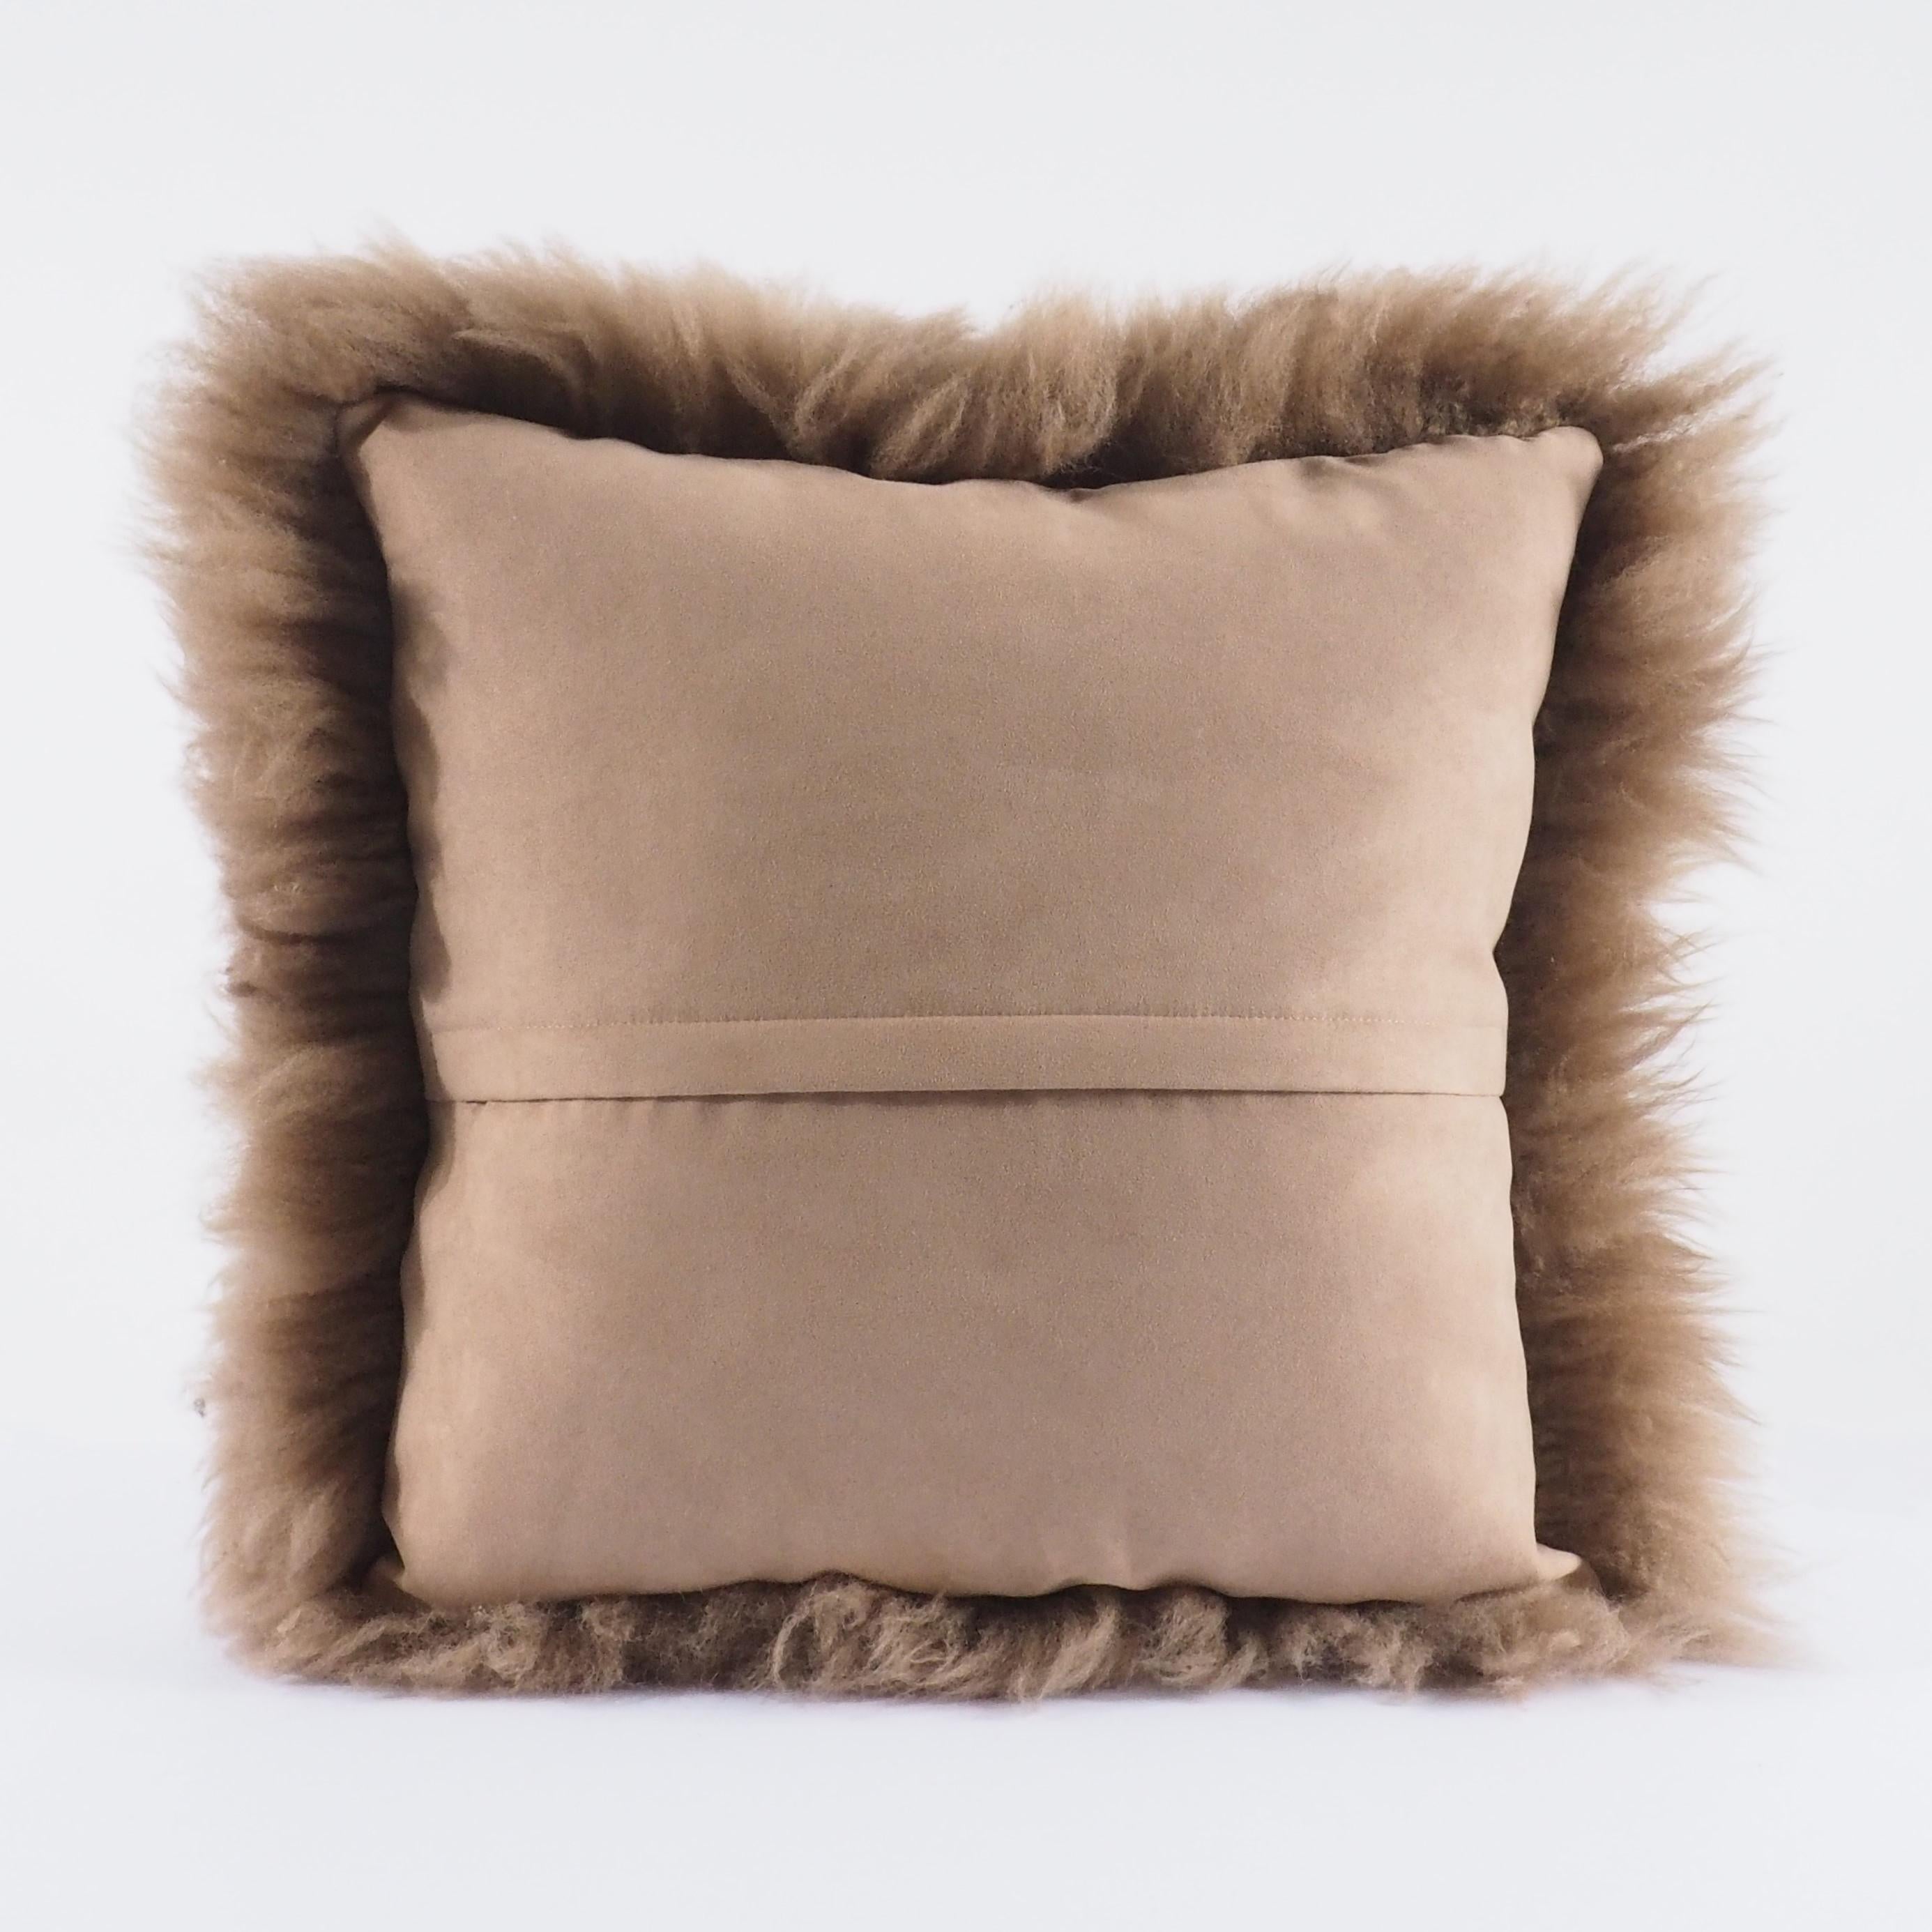 Italian Coffee Bean Dark Camel Shearling Sheepskin Pillow Fluffy Cushion by Muchi Decor For Sale